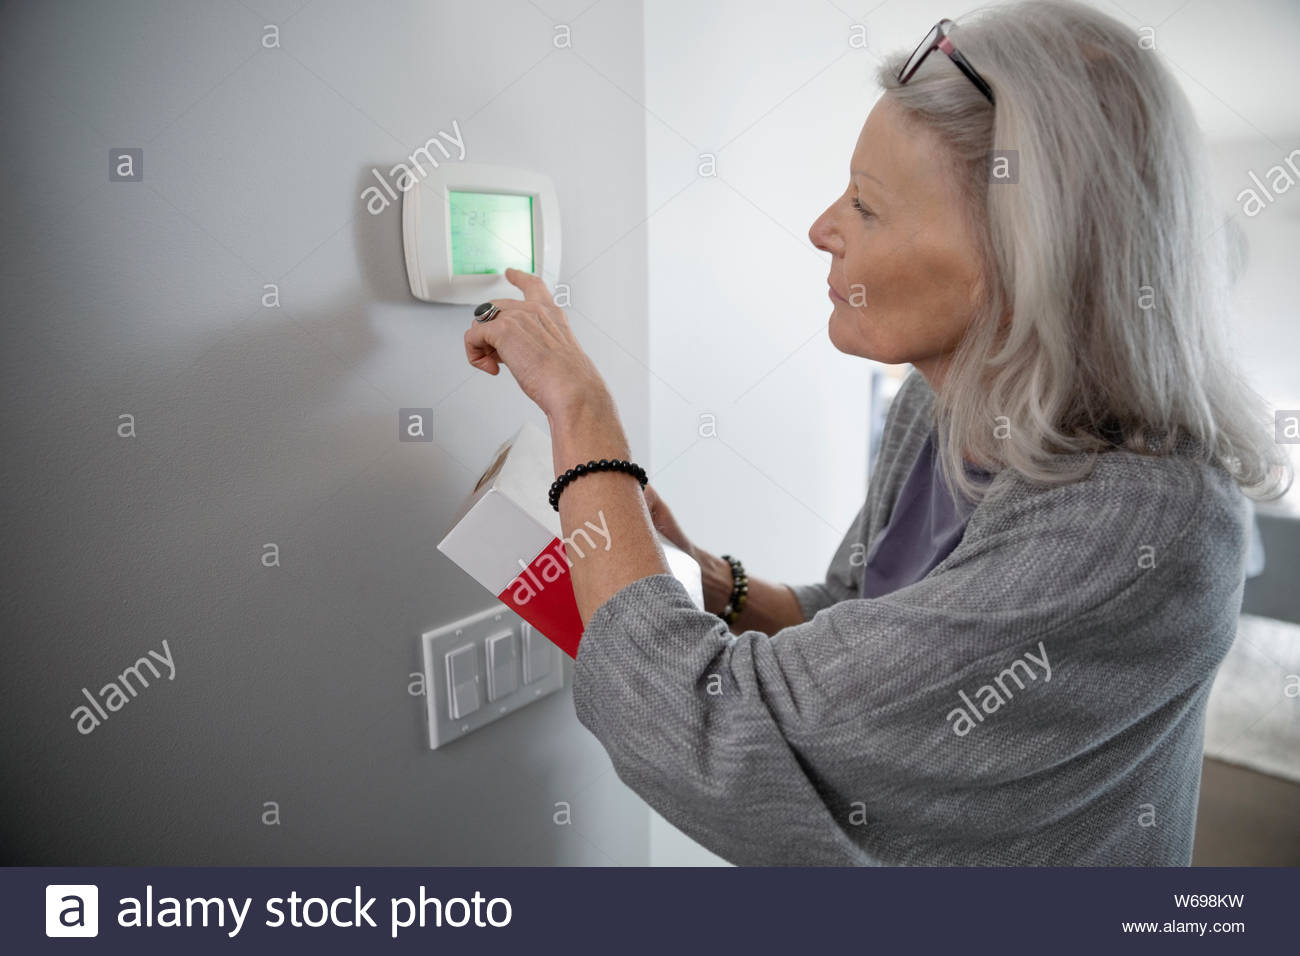 Senior woman programming digital thermostat Stock Photo